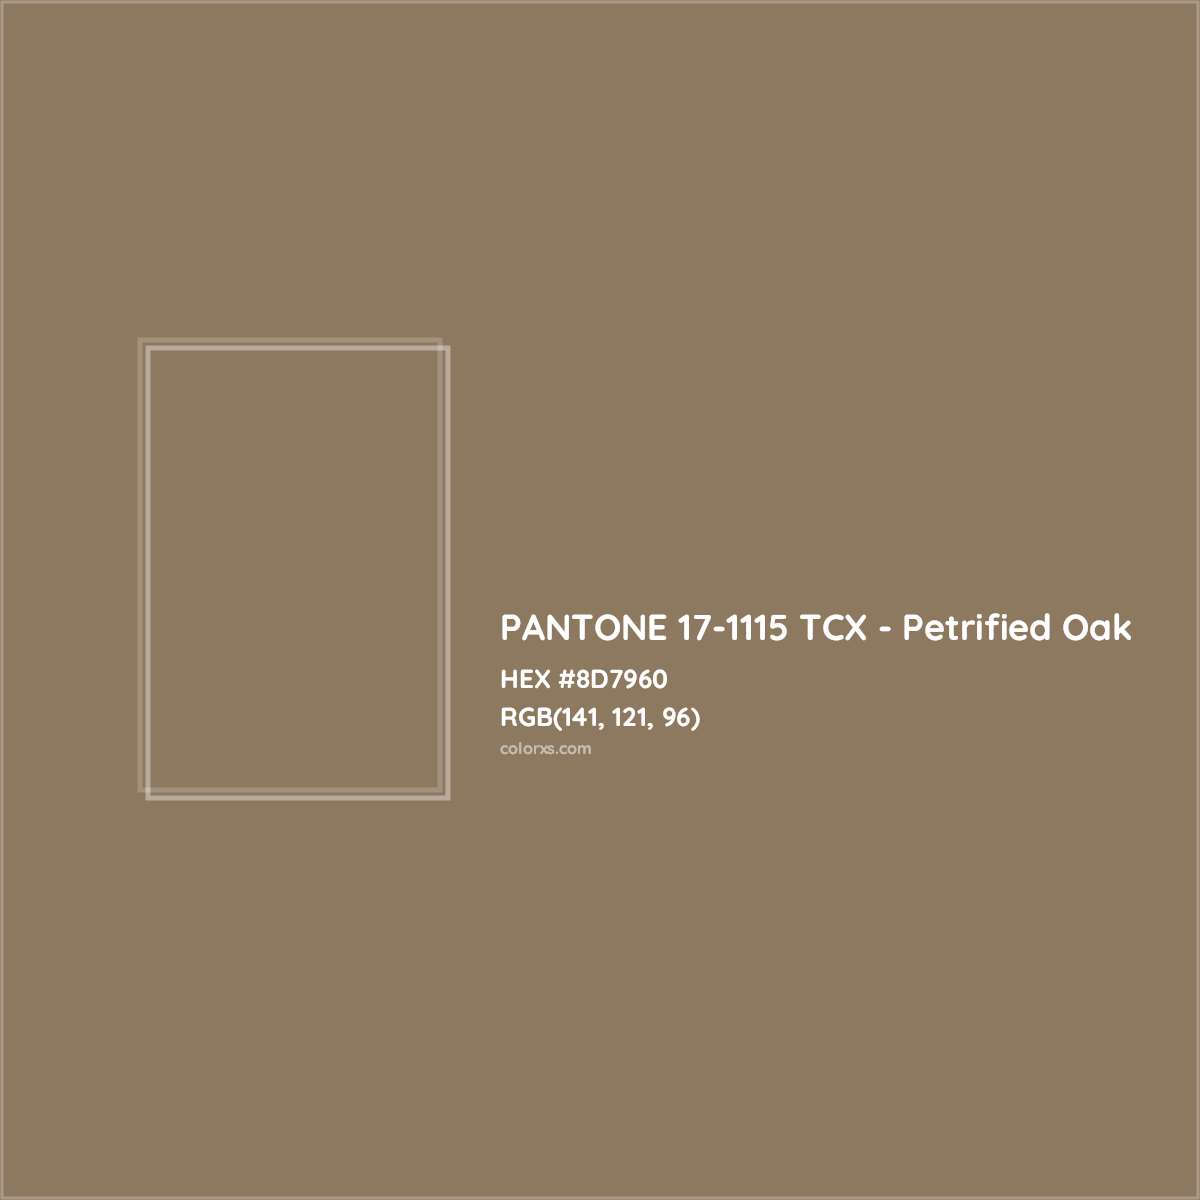 HEX #8D7960 PANTONE 17-1115 TCX - Petrified Oak CMS Pantone TCX - Color Code